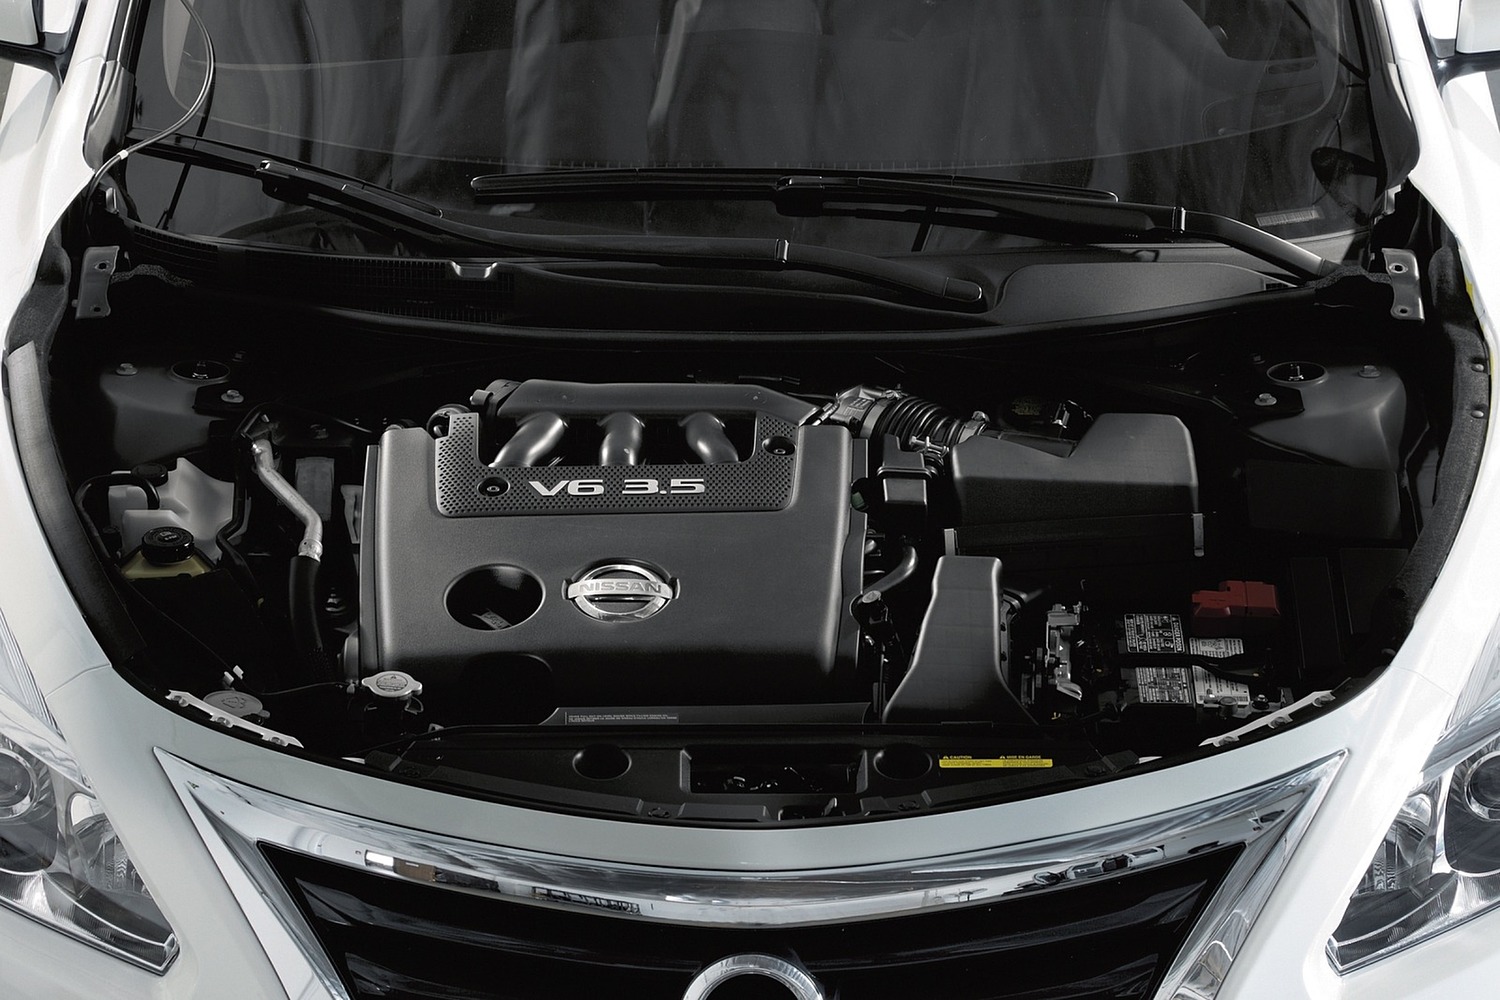 Nissan Altima 3.5 SL Sedan 3.5L V6 Engine Shown (2017 model year shown)